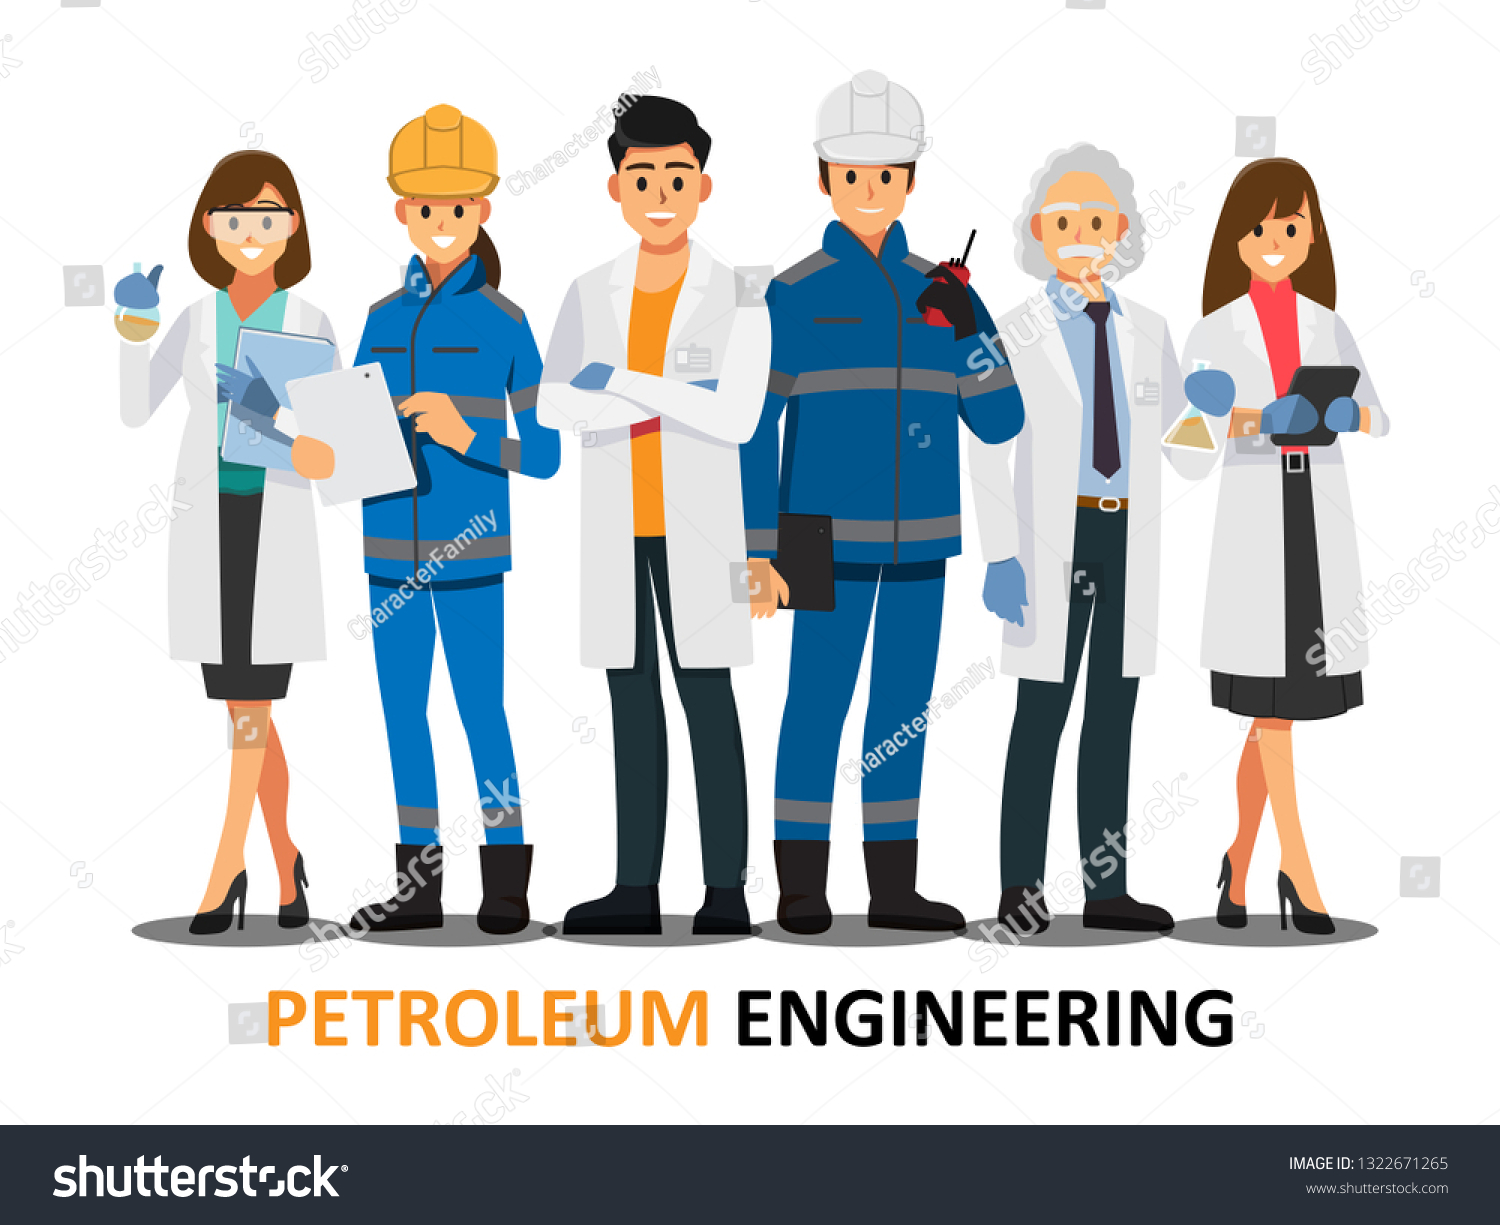 SVG of petroleum engineering teamwork ,Vector illustration cartoon character. svg